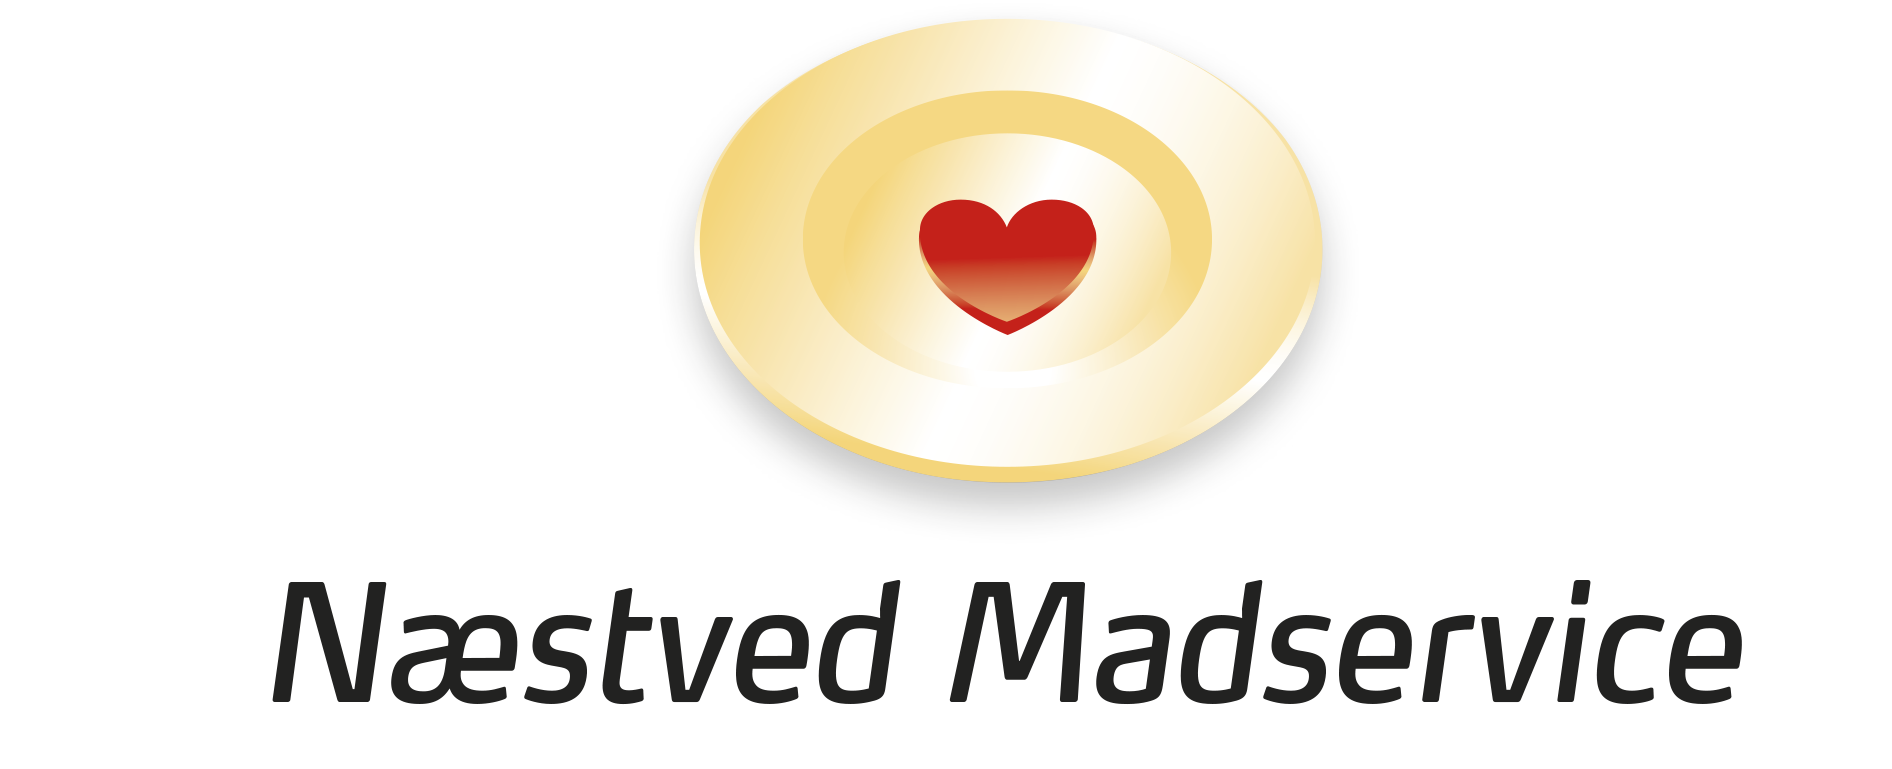 Næstved Madservice logo